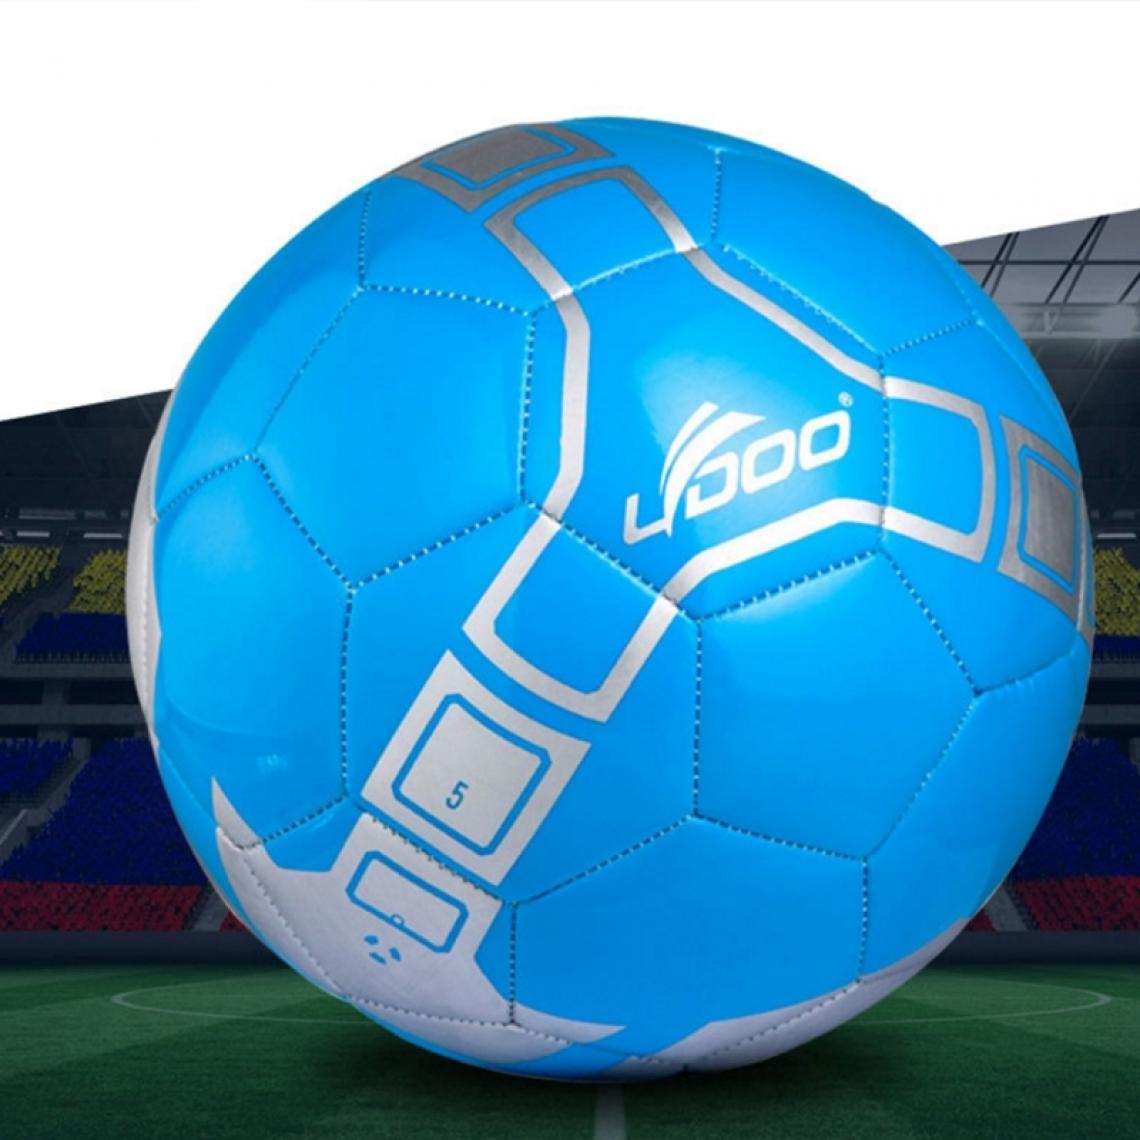 Wewoo - Ballon bleu 21.5cm cuir PU couture portable match de football - Jeux de balles